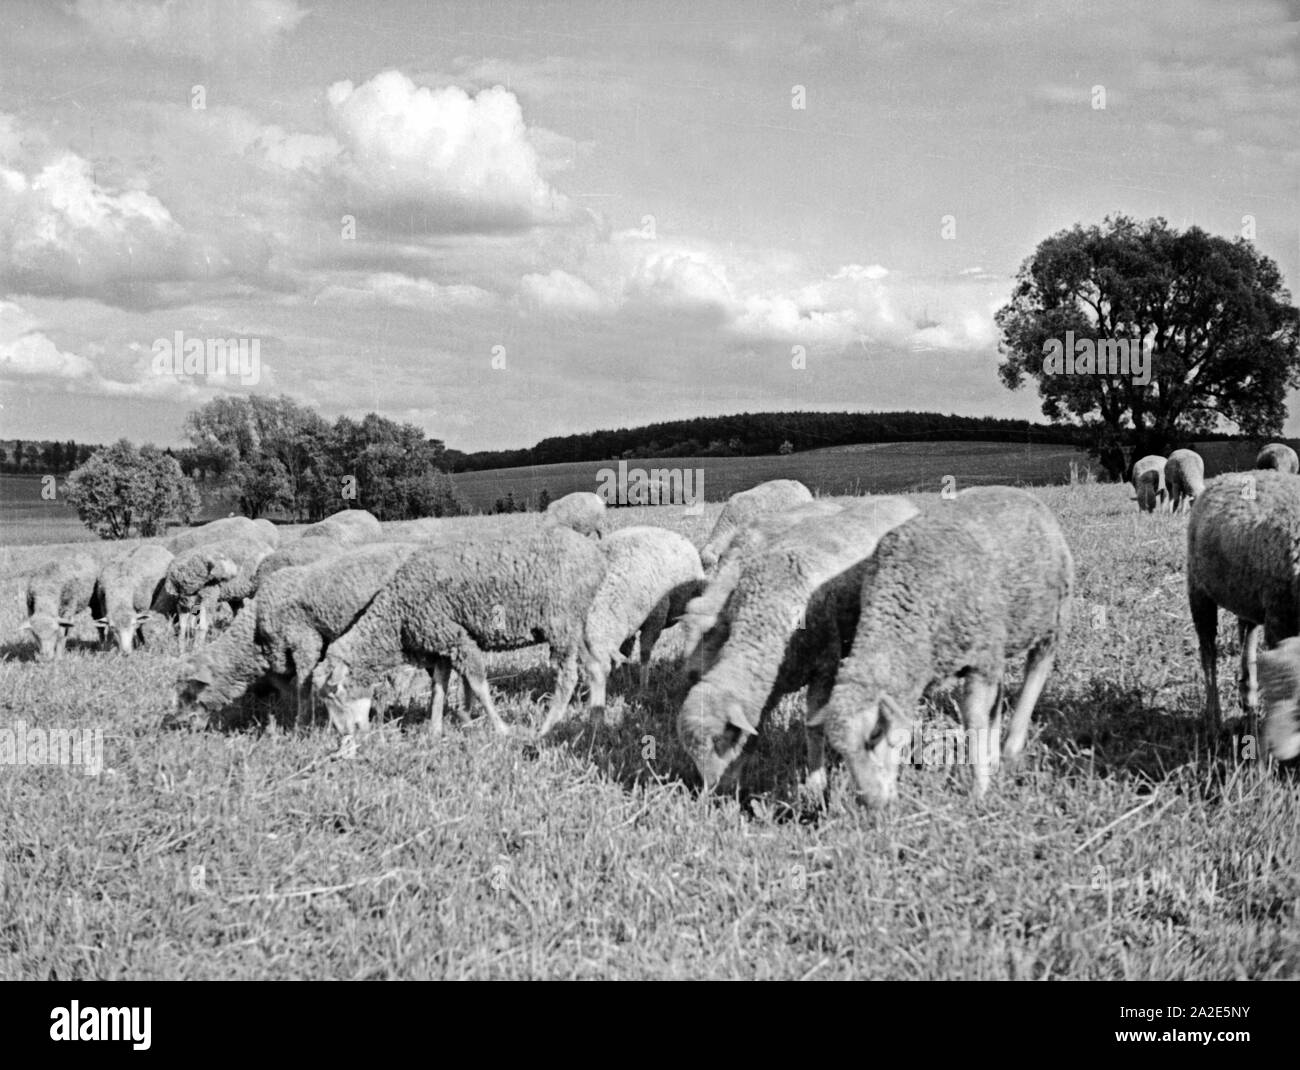 Eine hungrige Schafherde wird über ein Stoppelfeld geschickt, Ostpreußen, 1930er Jahre. A flock of hungry sheep is sent t a stubble field, East Prussia, 1930s. Stock Photo